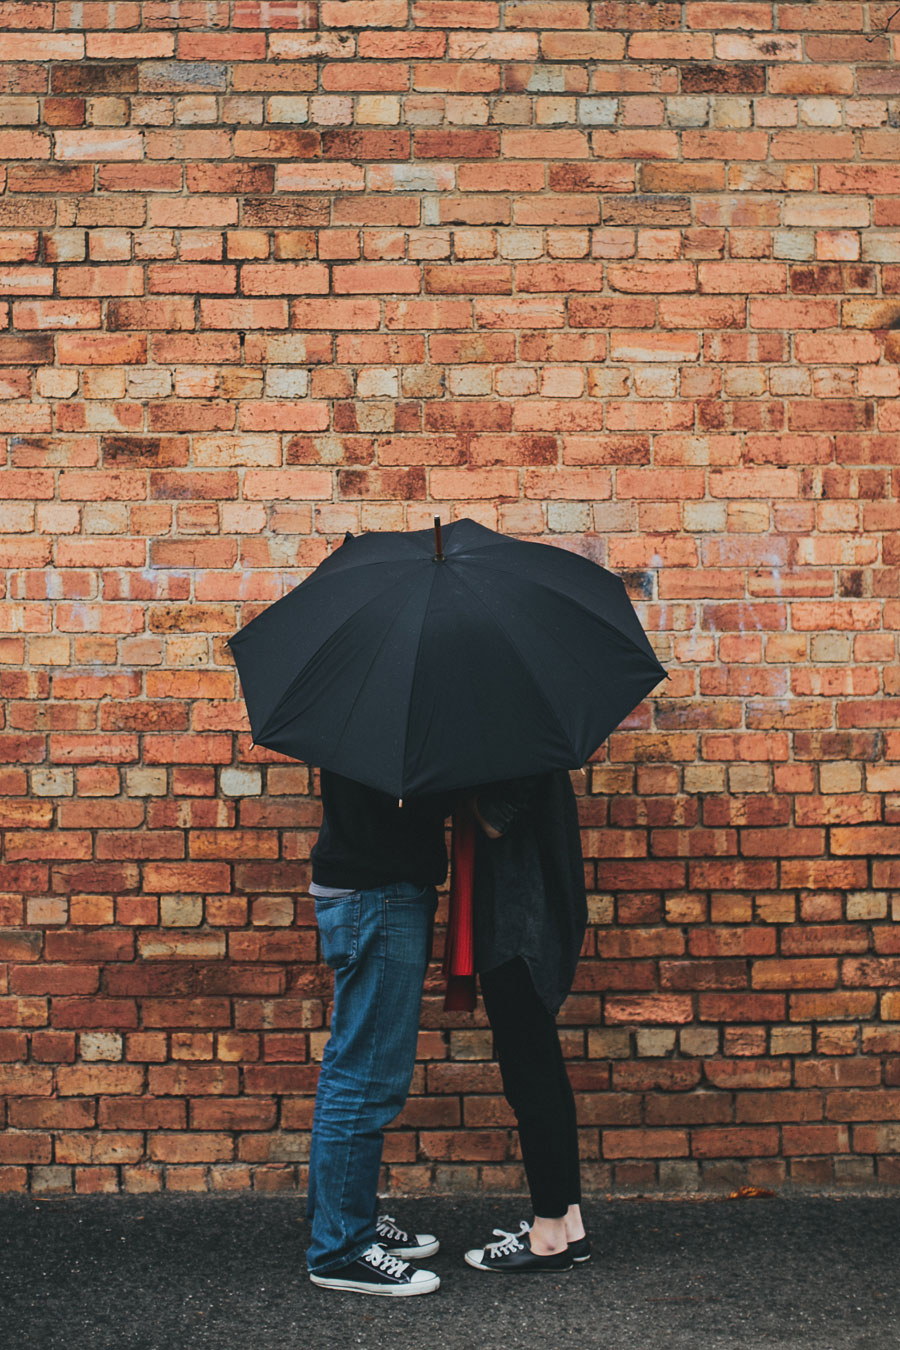 Couple hiding under umbrella engagement